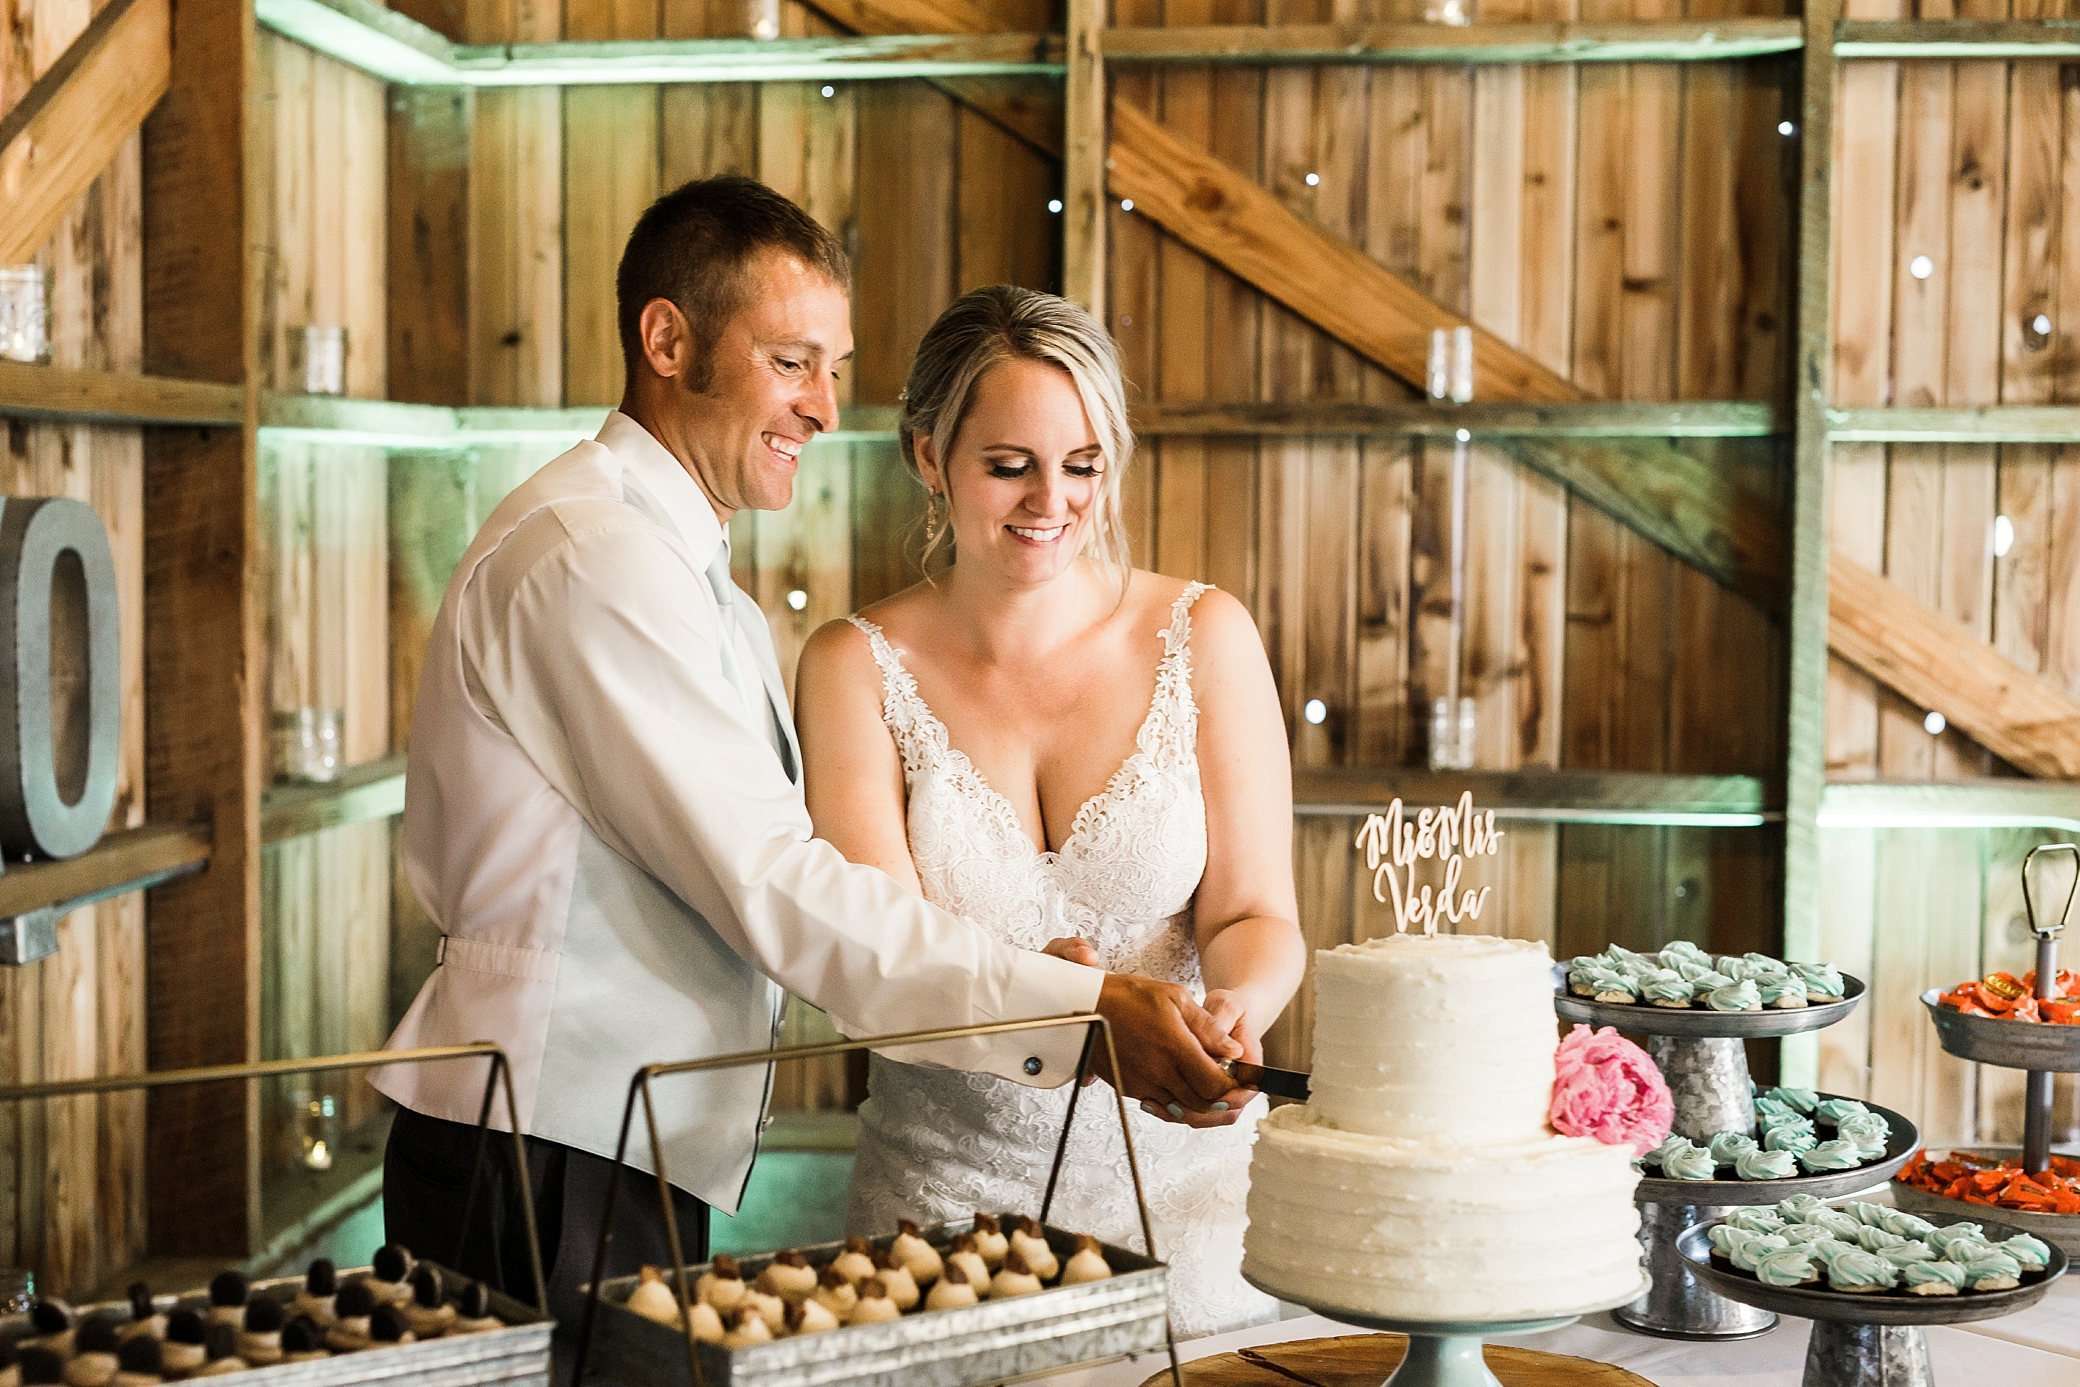 Bride and groom cutting the cake during reception at Maplehurst Farm Wedding Venue in Mount Vernon, WA. Photographed by Washington Wedding Photographer, Megan Montalvo Photography. 